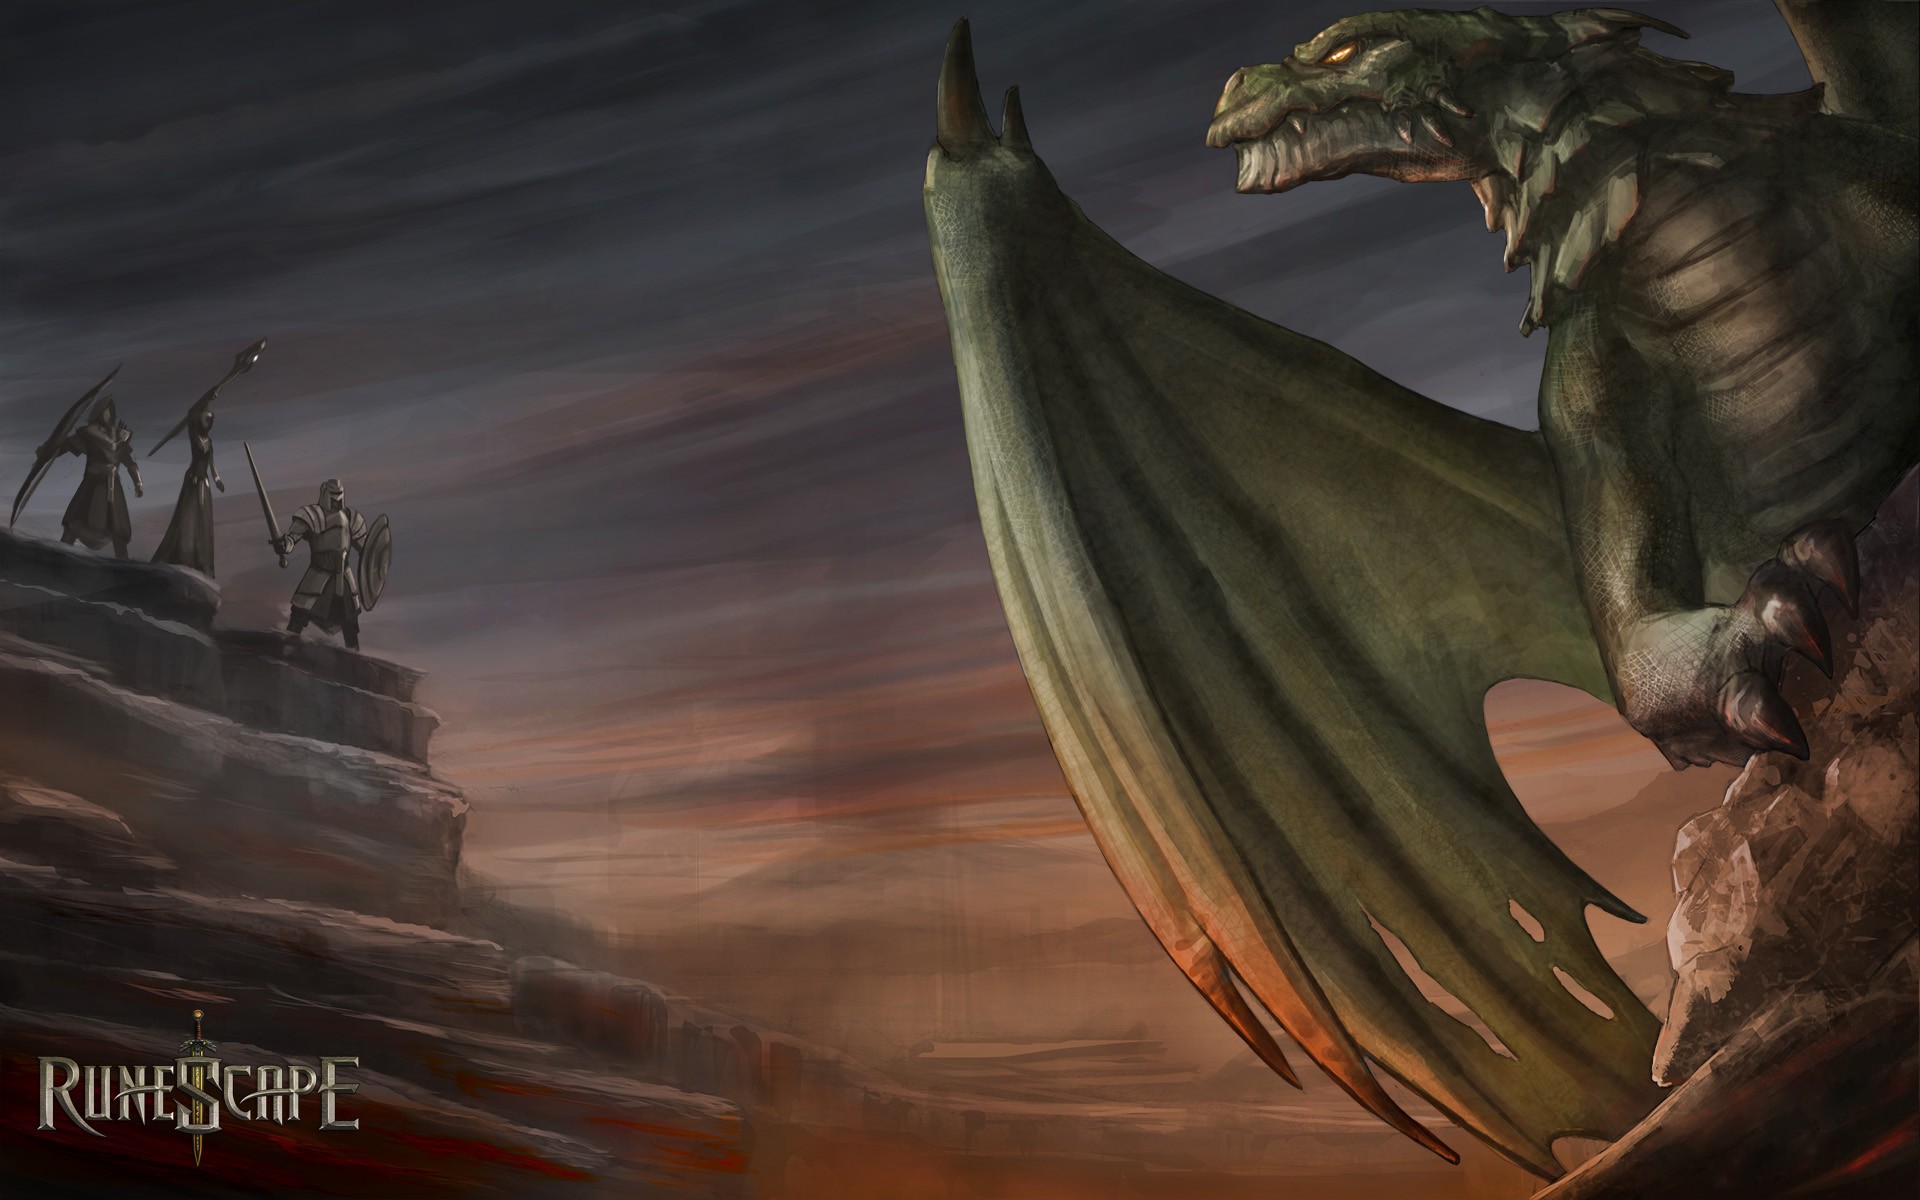 General 1920x1200 Runescape dragon fantasy art digital art